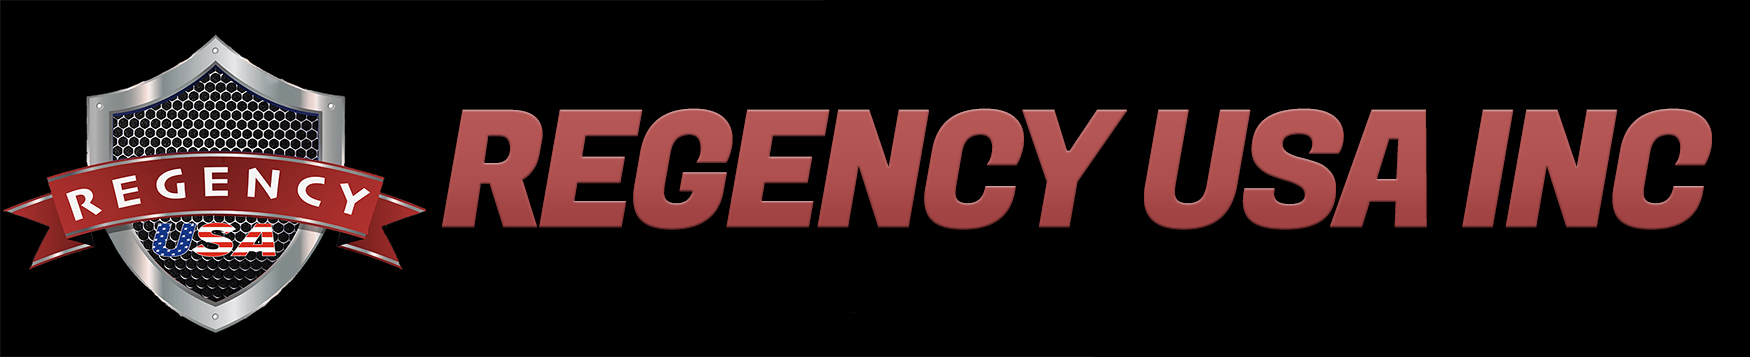 Regency USA Inc